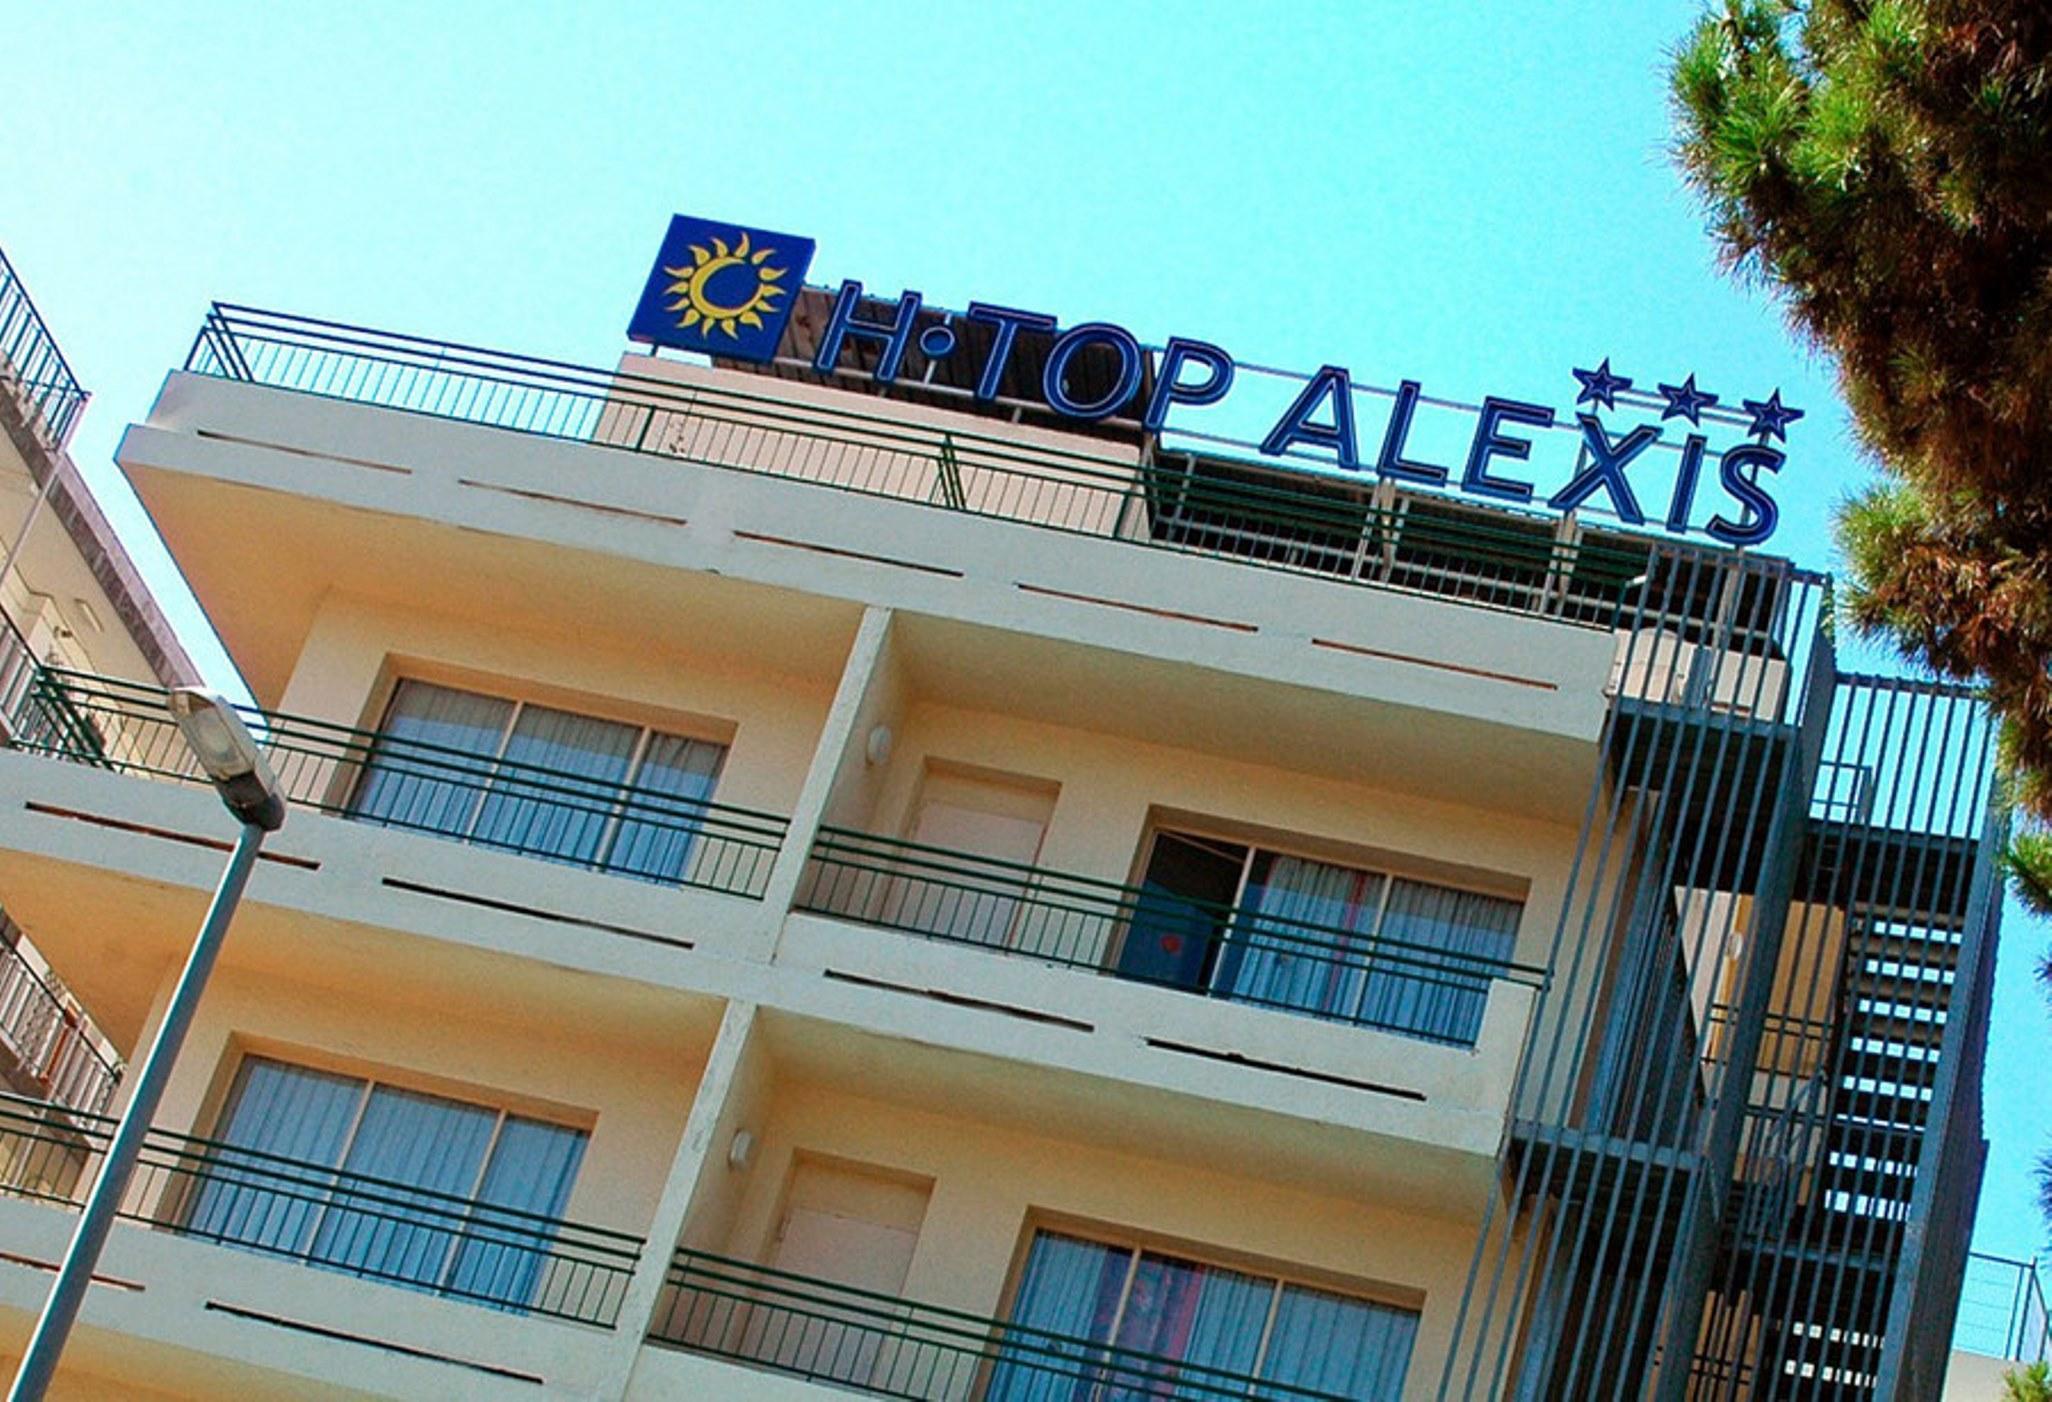 Htop Alexis #Htopenjoy 滨海略雷特 外观 照片